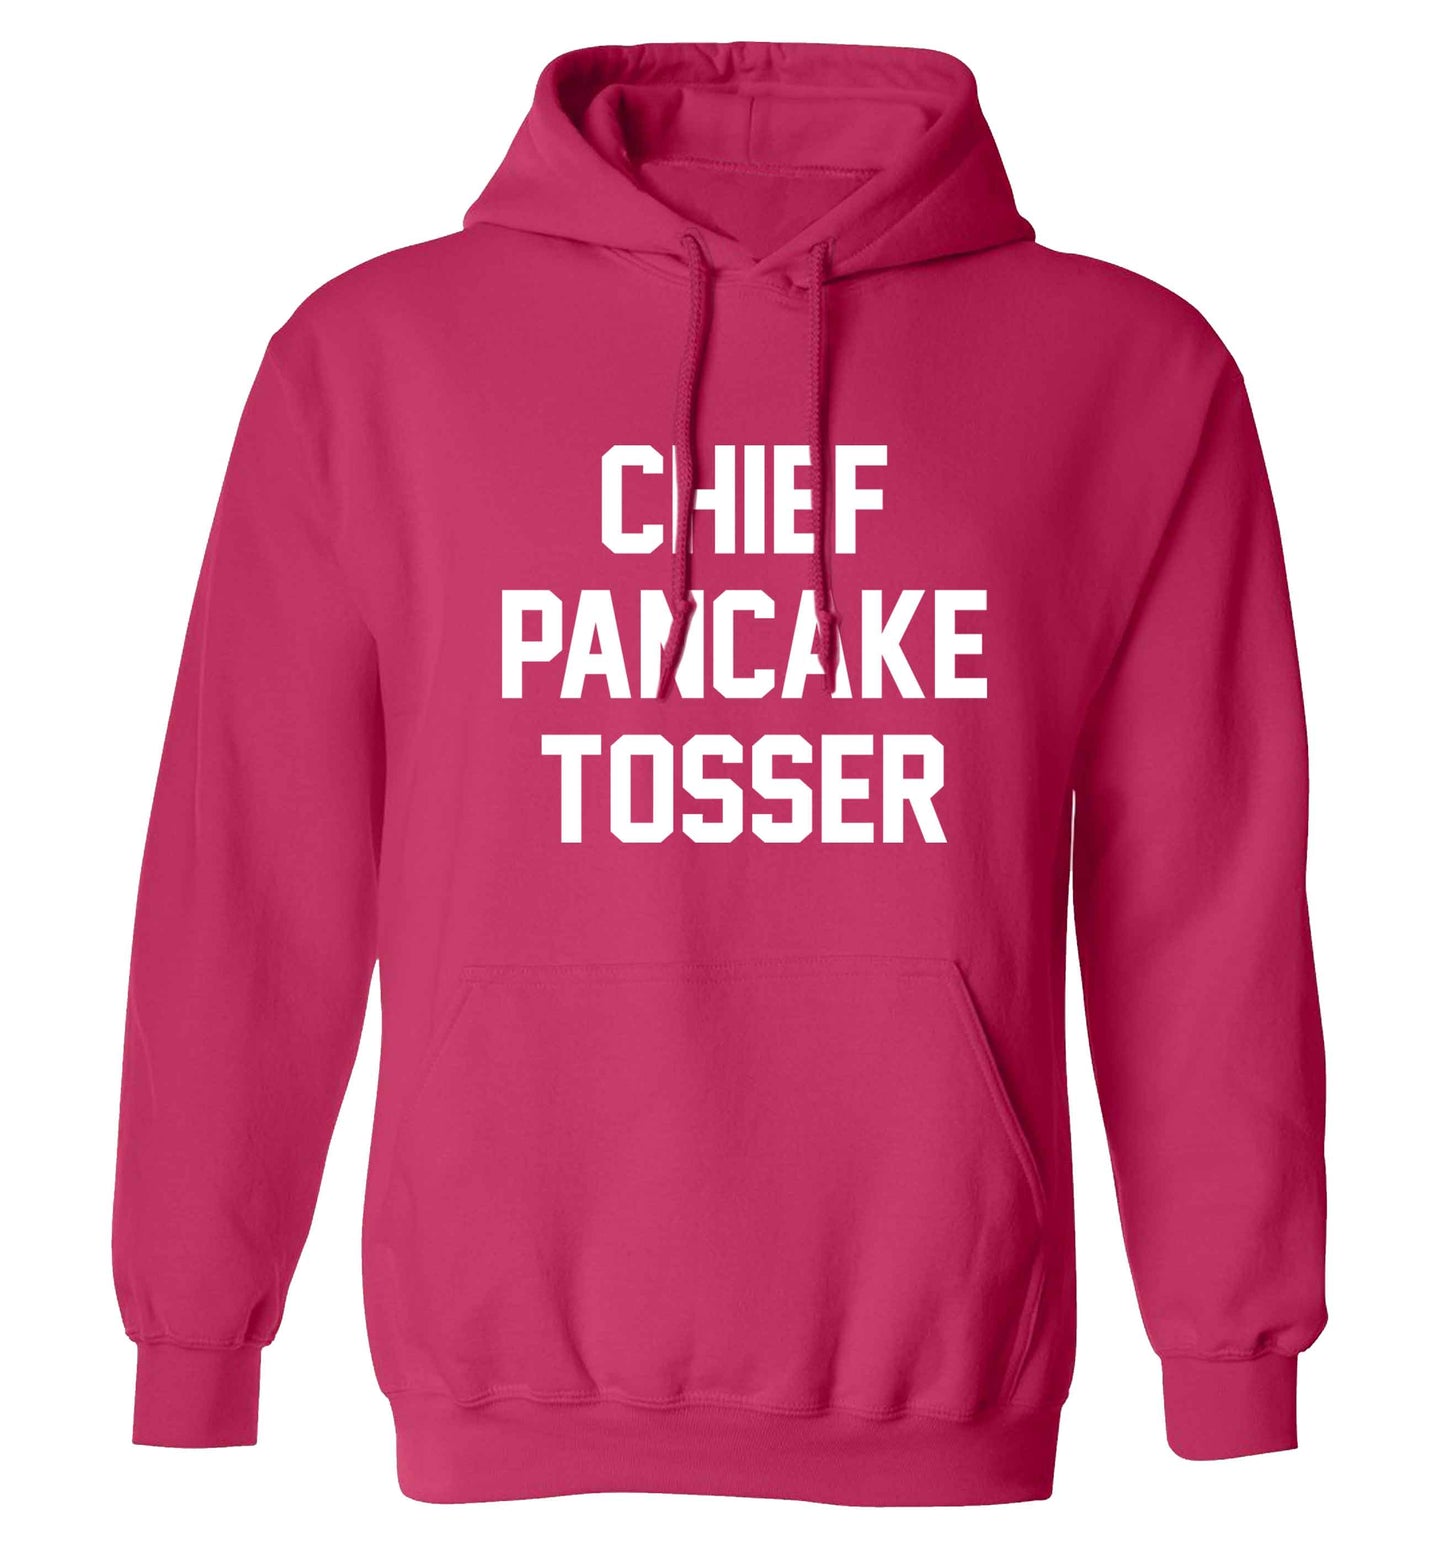 Chief pancake tosser adults unisex pink hoodie 2XL